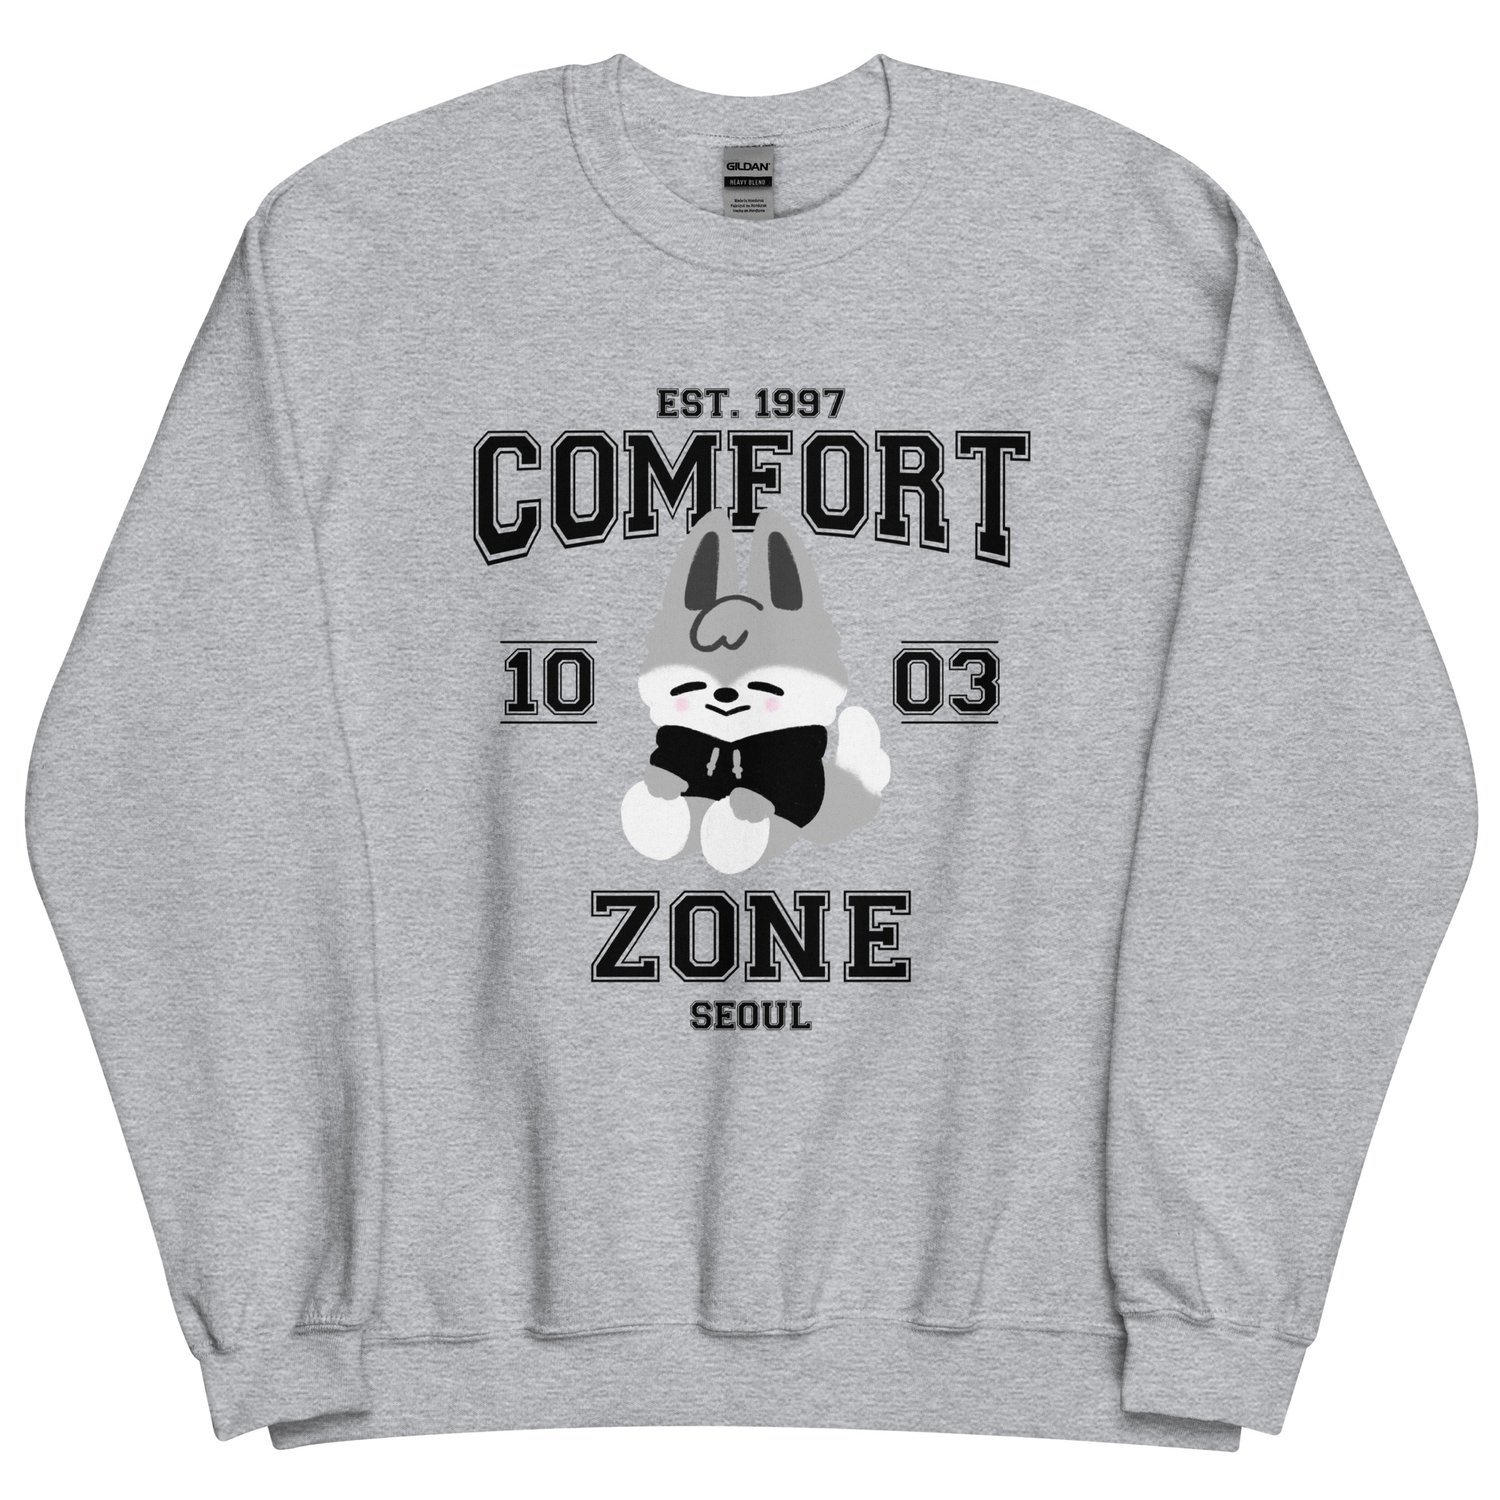 Image of 1003 comfort zone sweatshirt